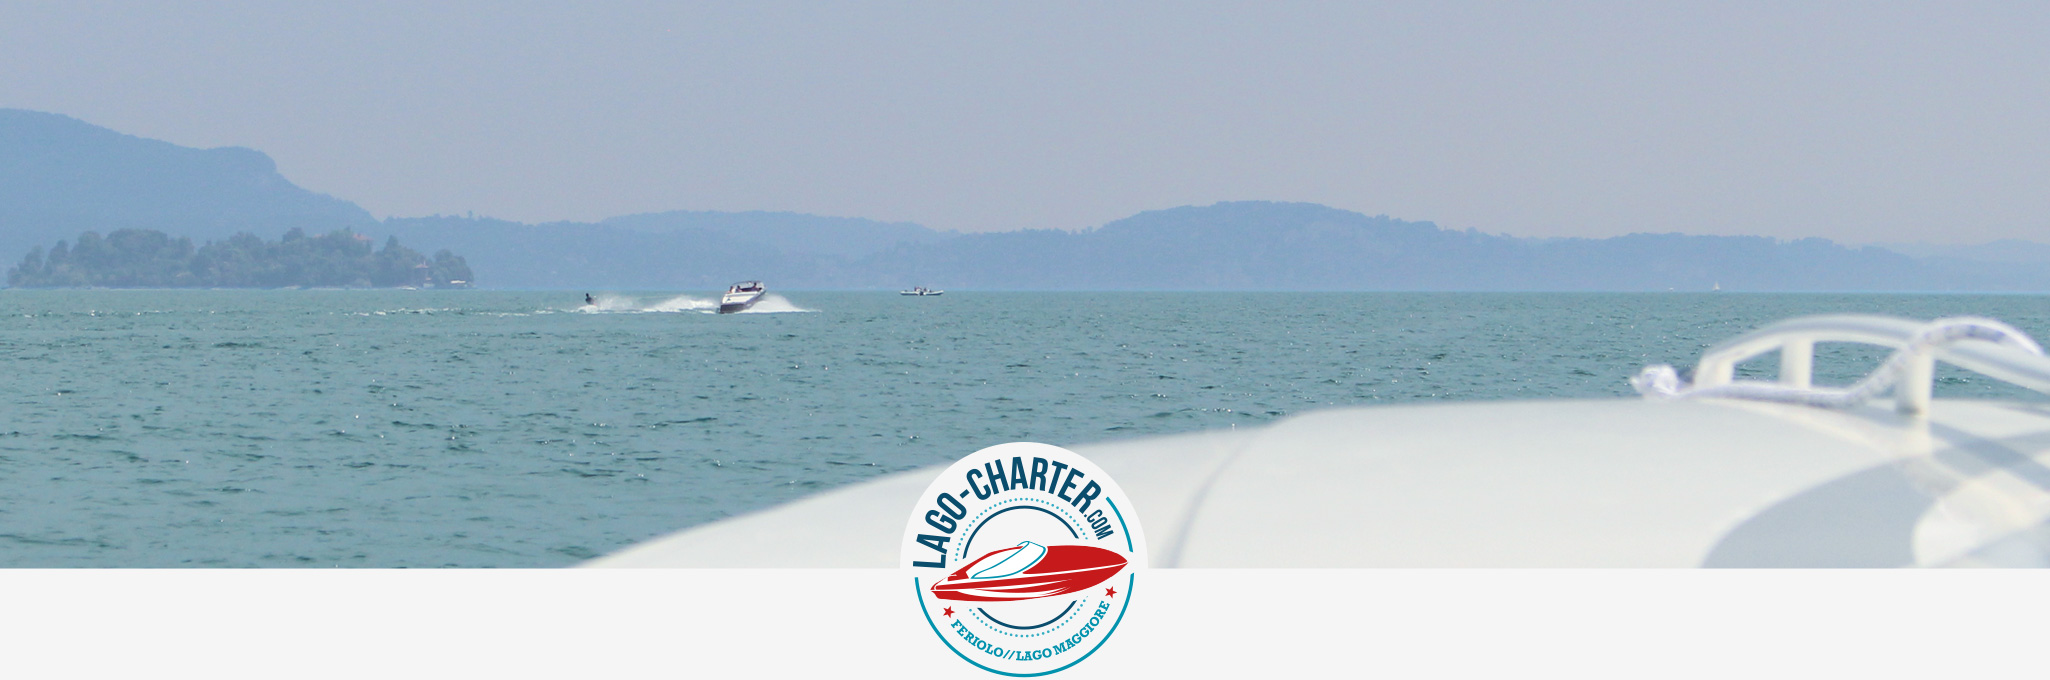 lago-charter-charterbedingungen-08.jpg